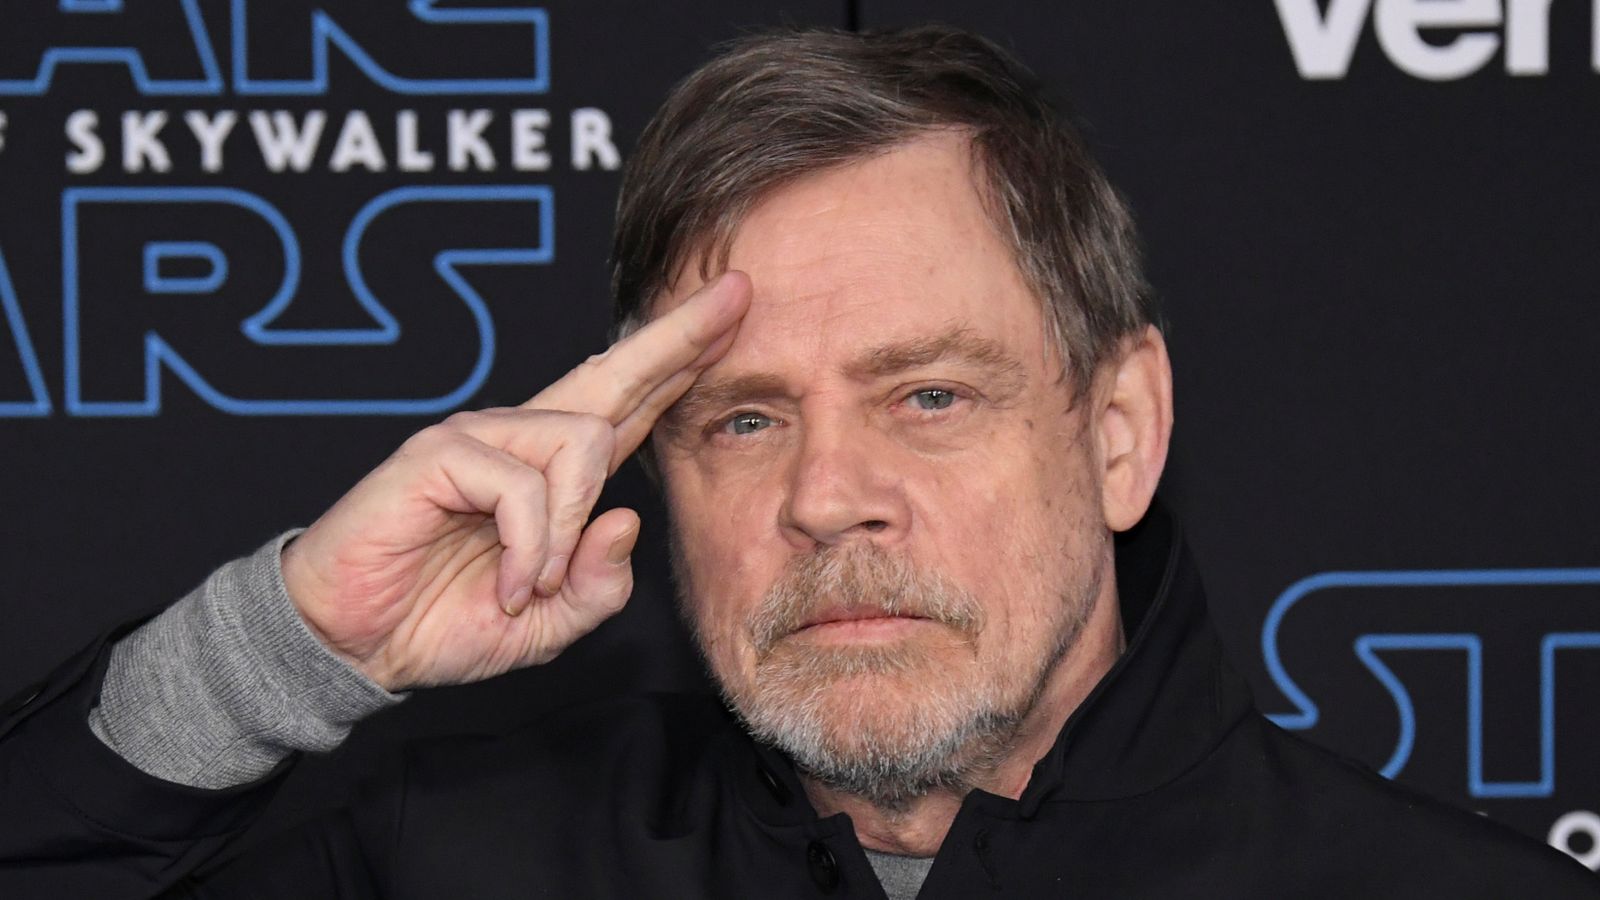 Does Mark Hamill Return as Luke Skywalker in the next Star Wars Movie?